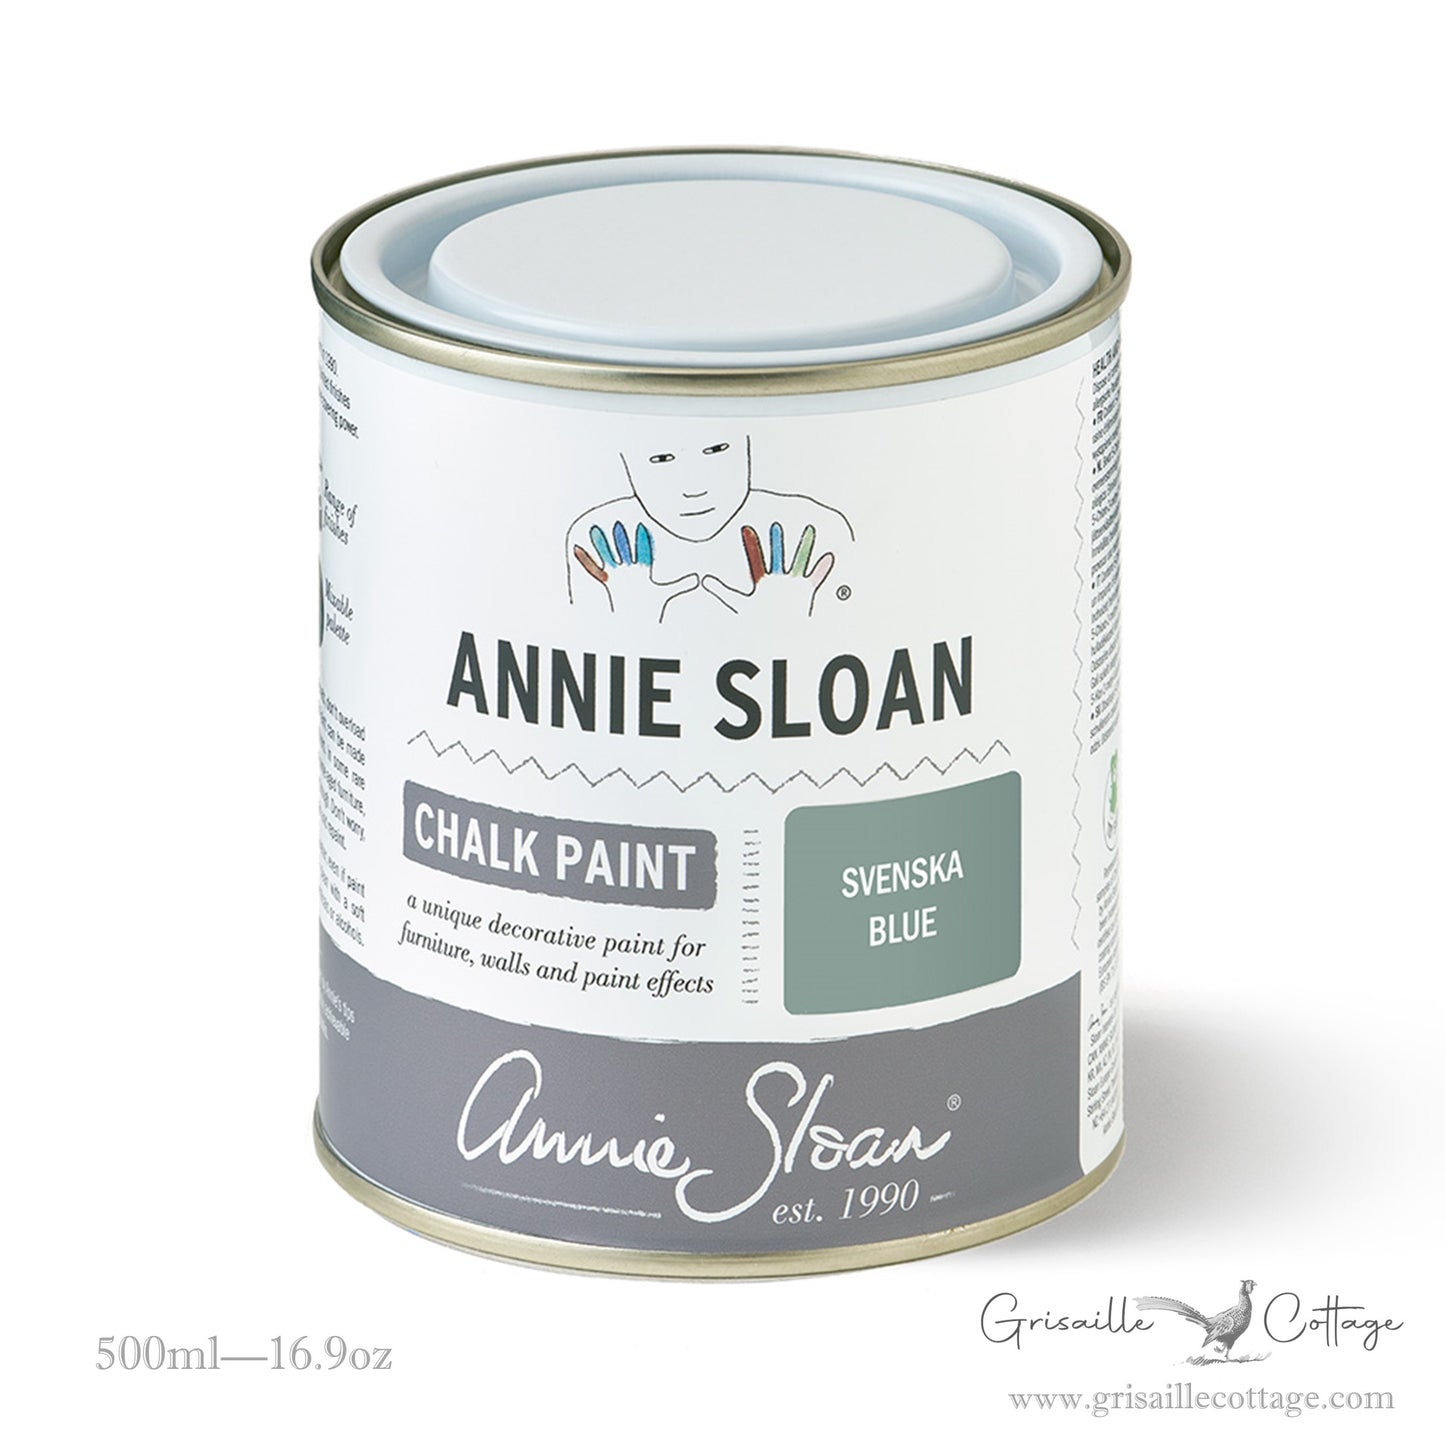 Svenska Blue - Annie Sloan Chalk Paint